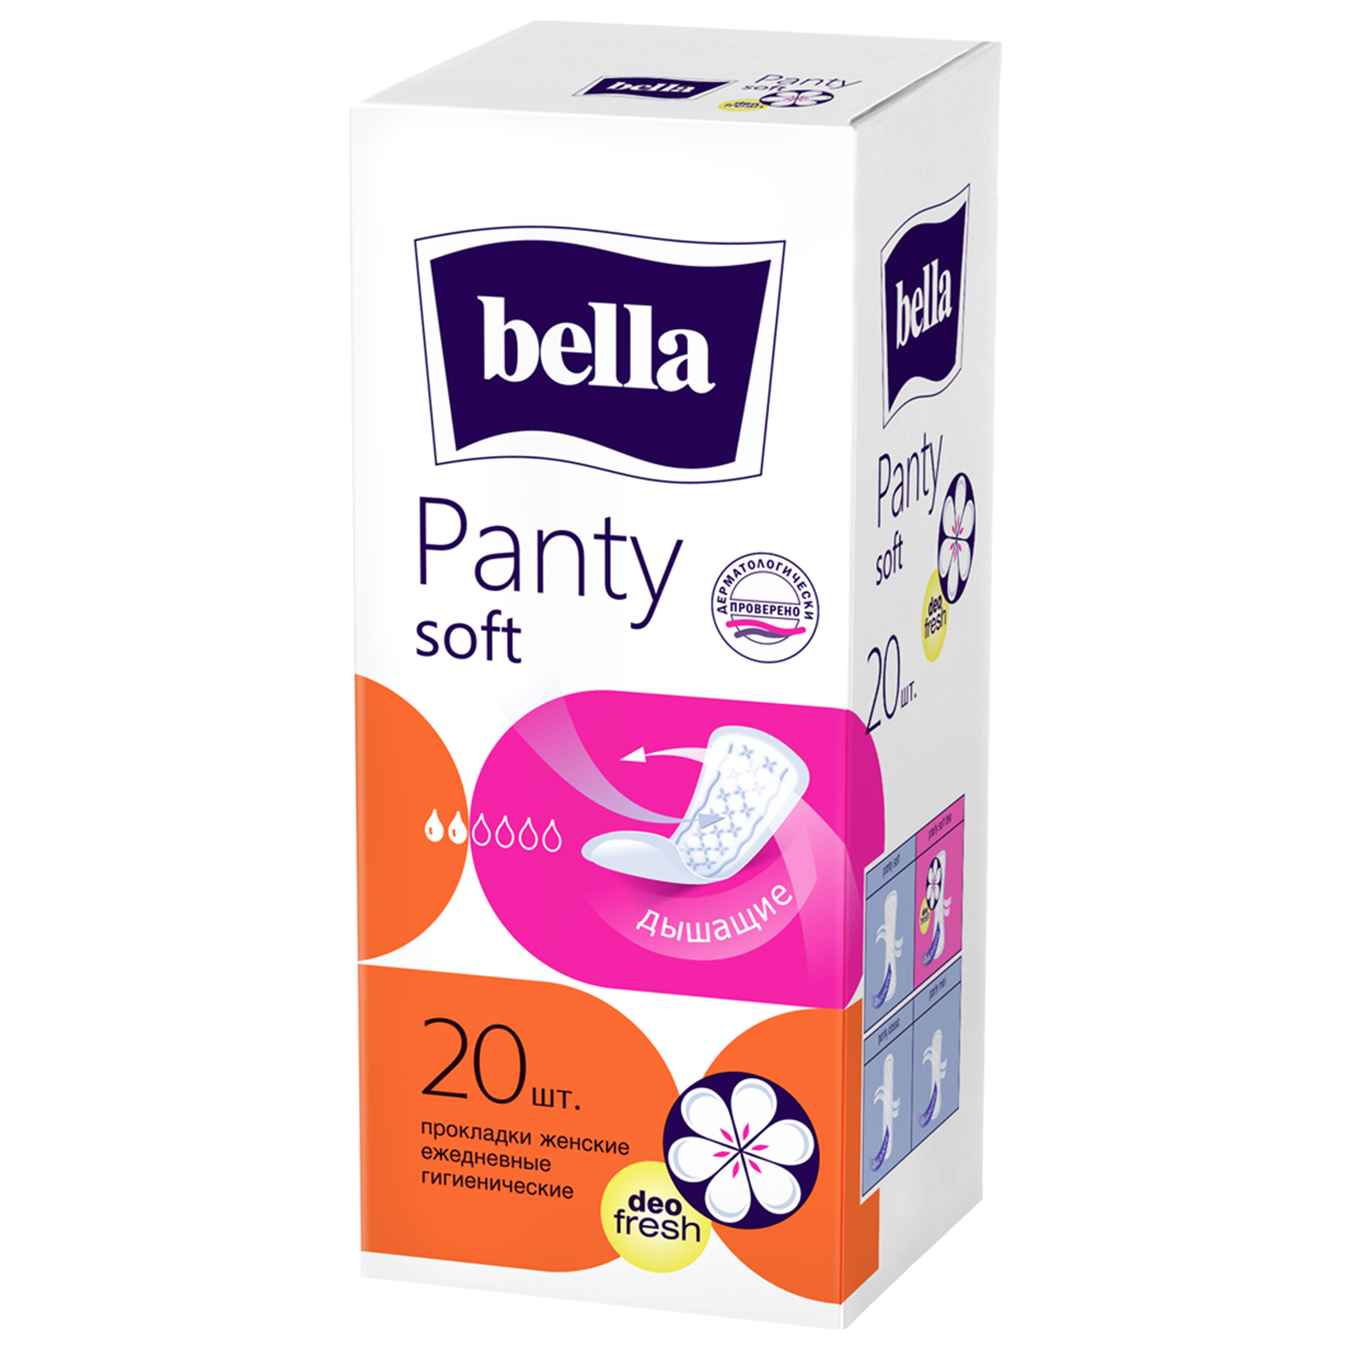 Pads Bella Panty Soft Deo Fresh daily 20pcs